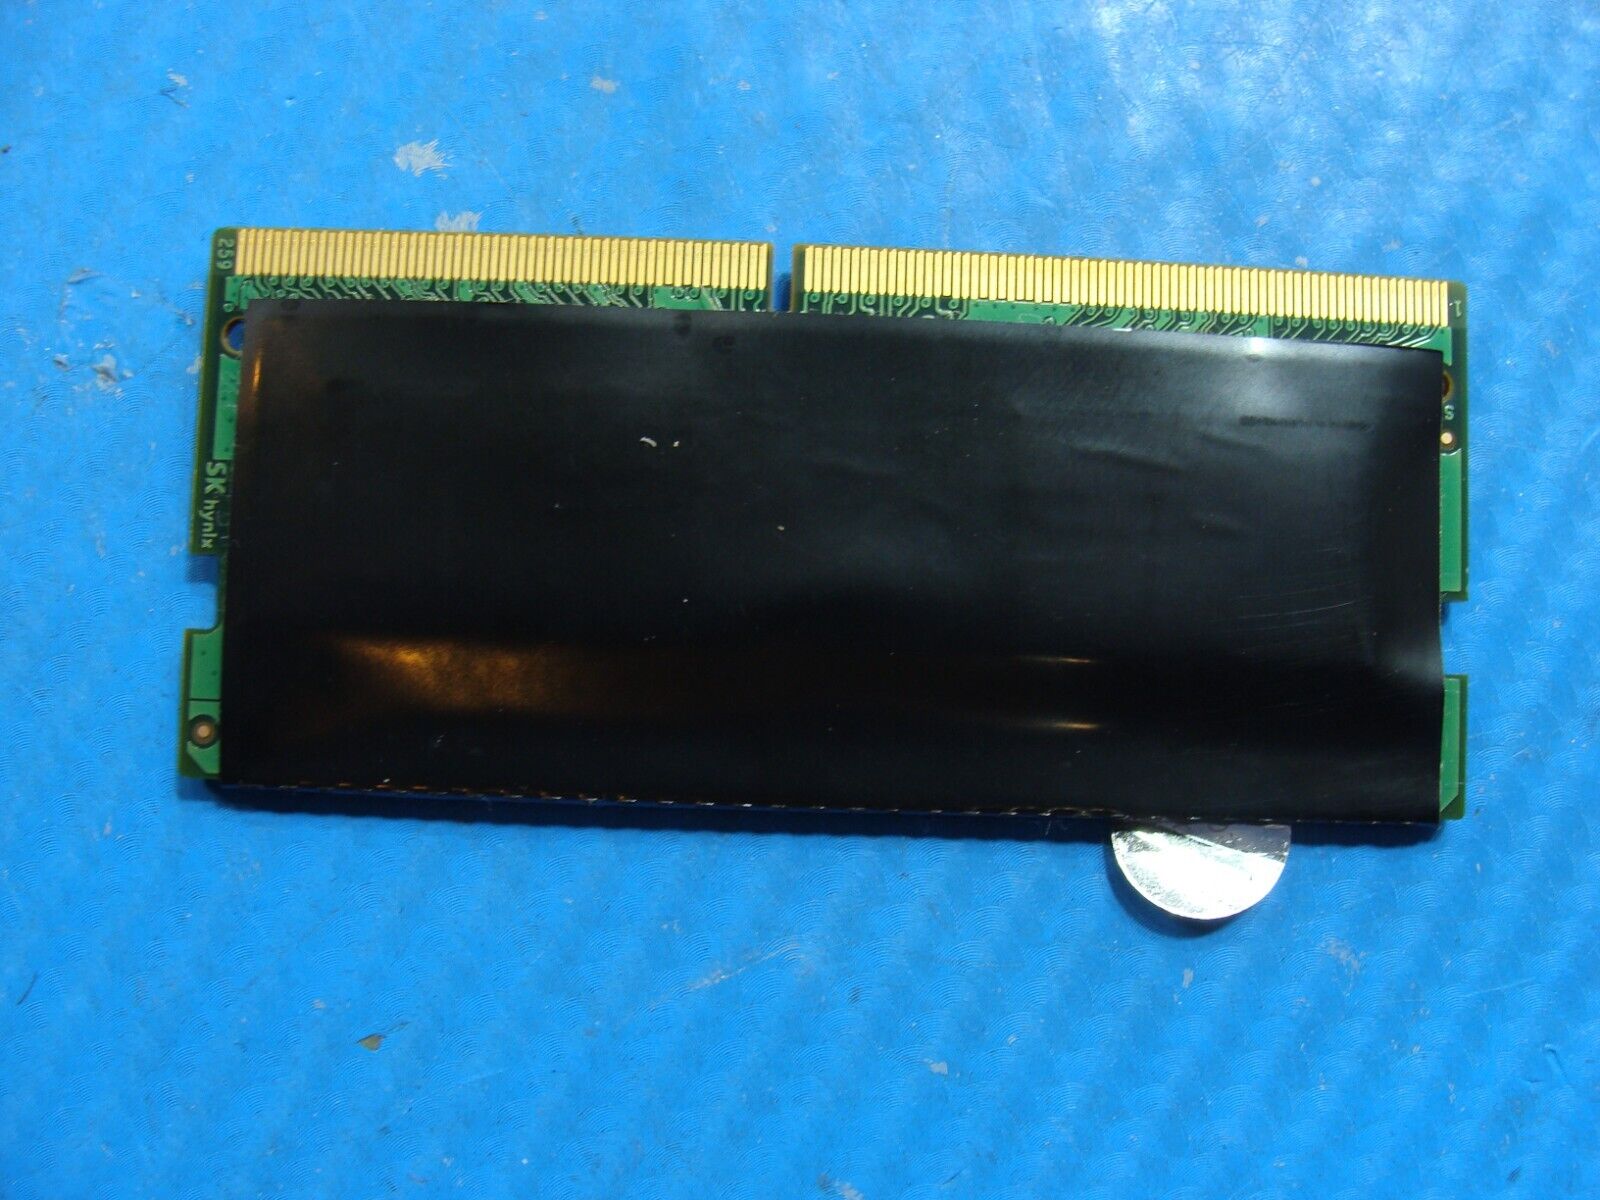 Asus M712D SK Hynix 4GB 1Rx16 PC4-2666V Memory RAM SO-DIMM HMA851S6JJR6N-VK